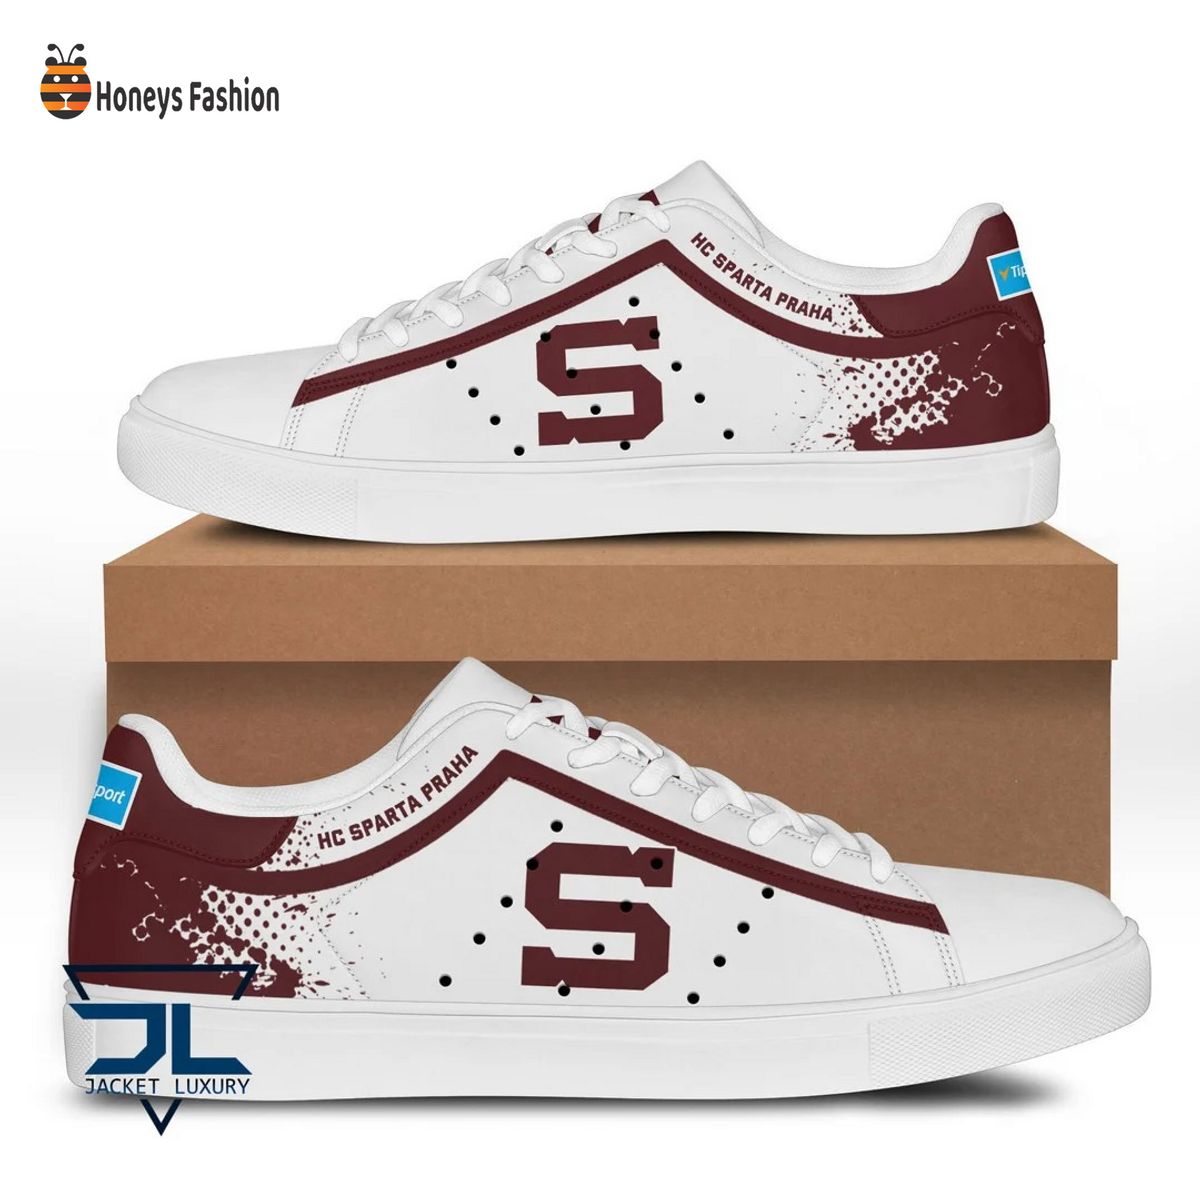 HC Slavia Praha stan smith skate shoes